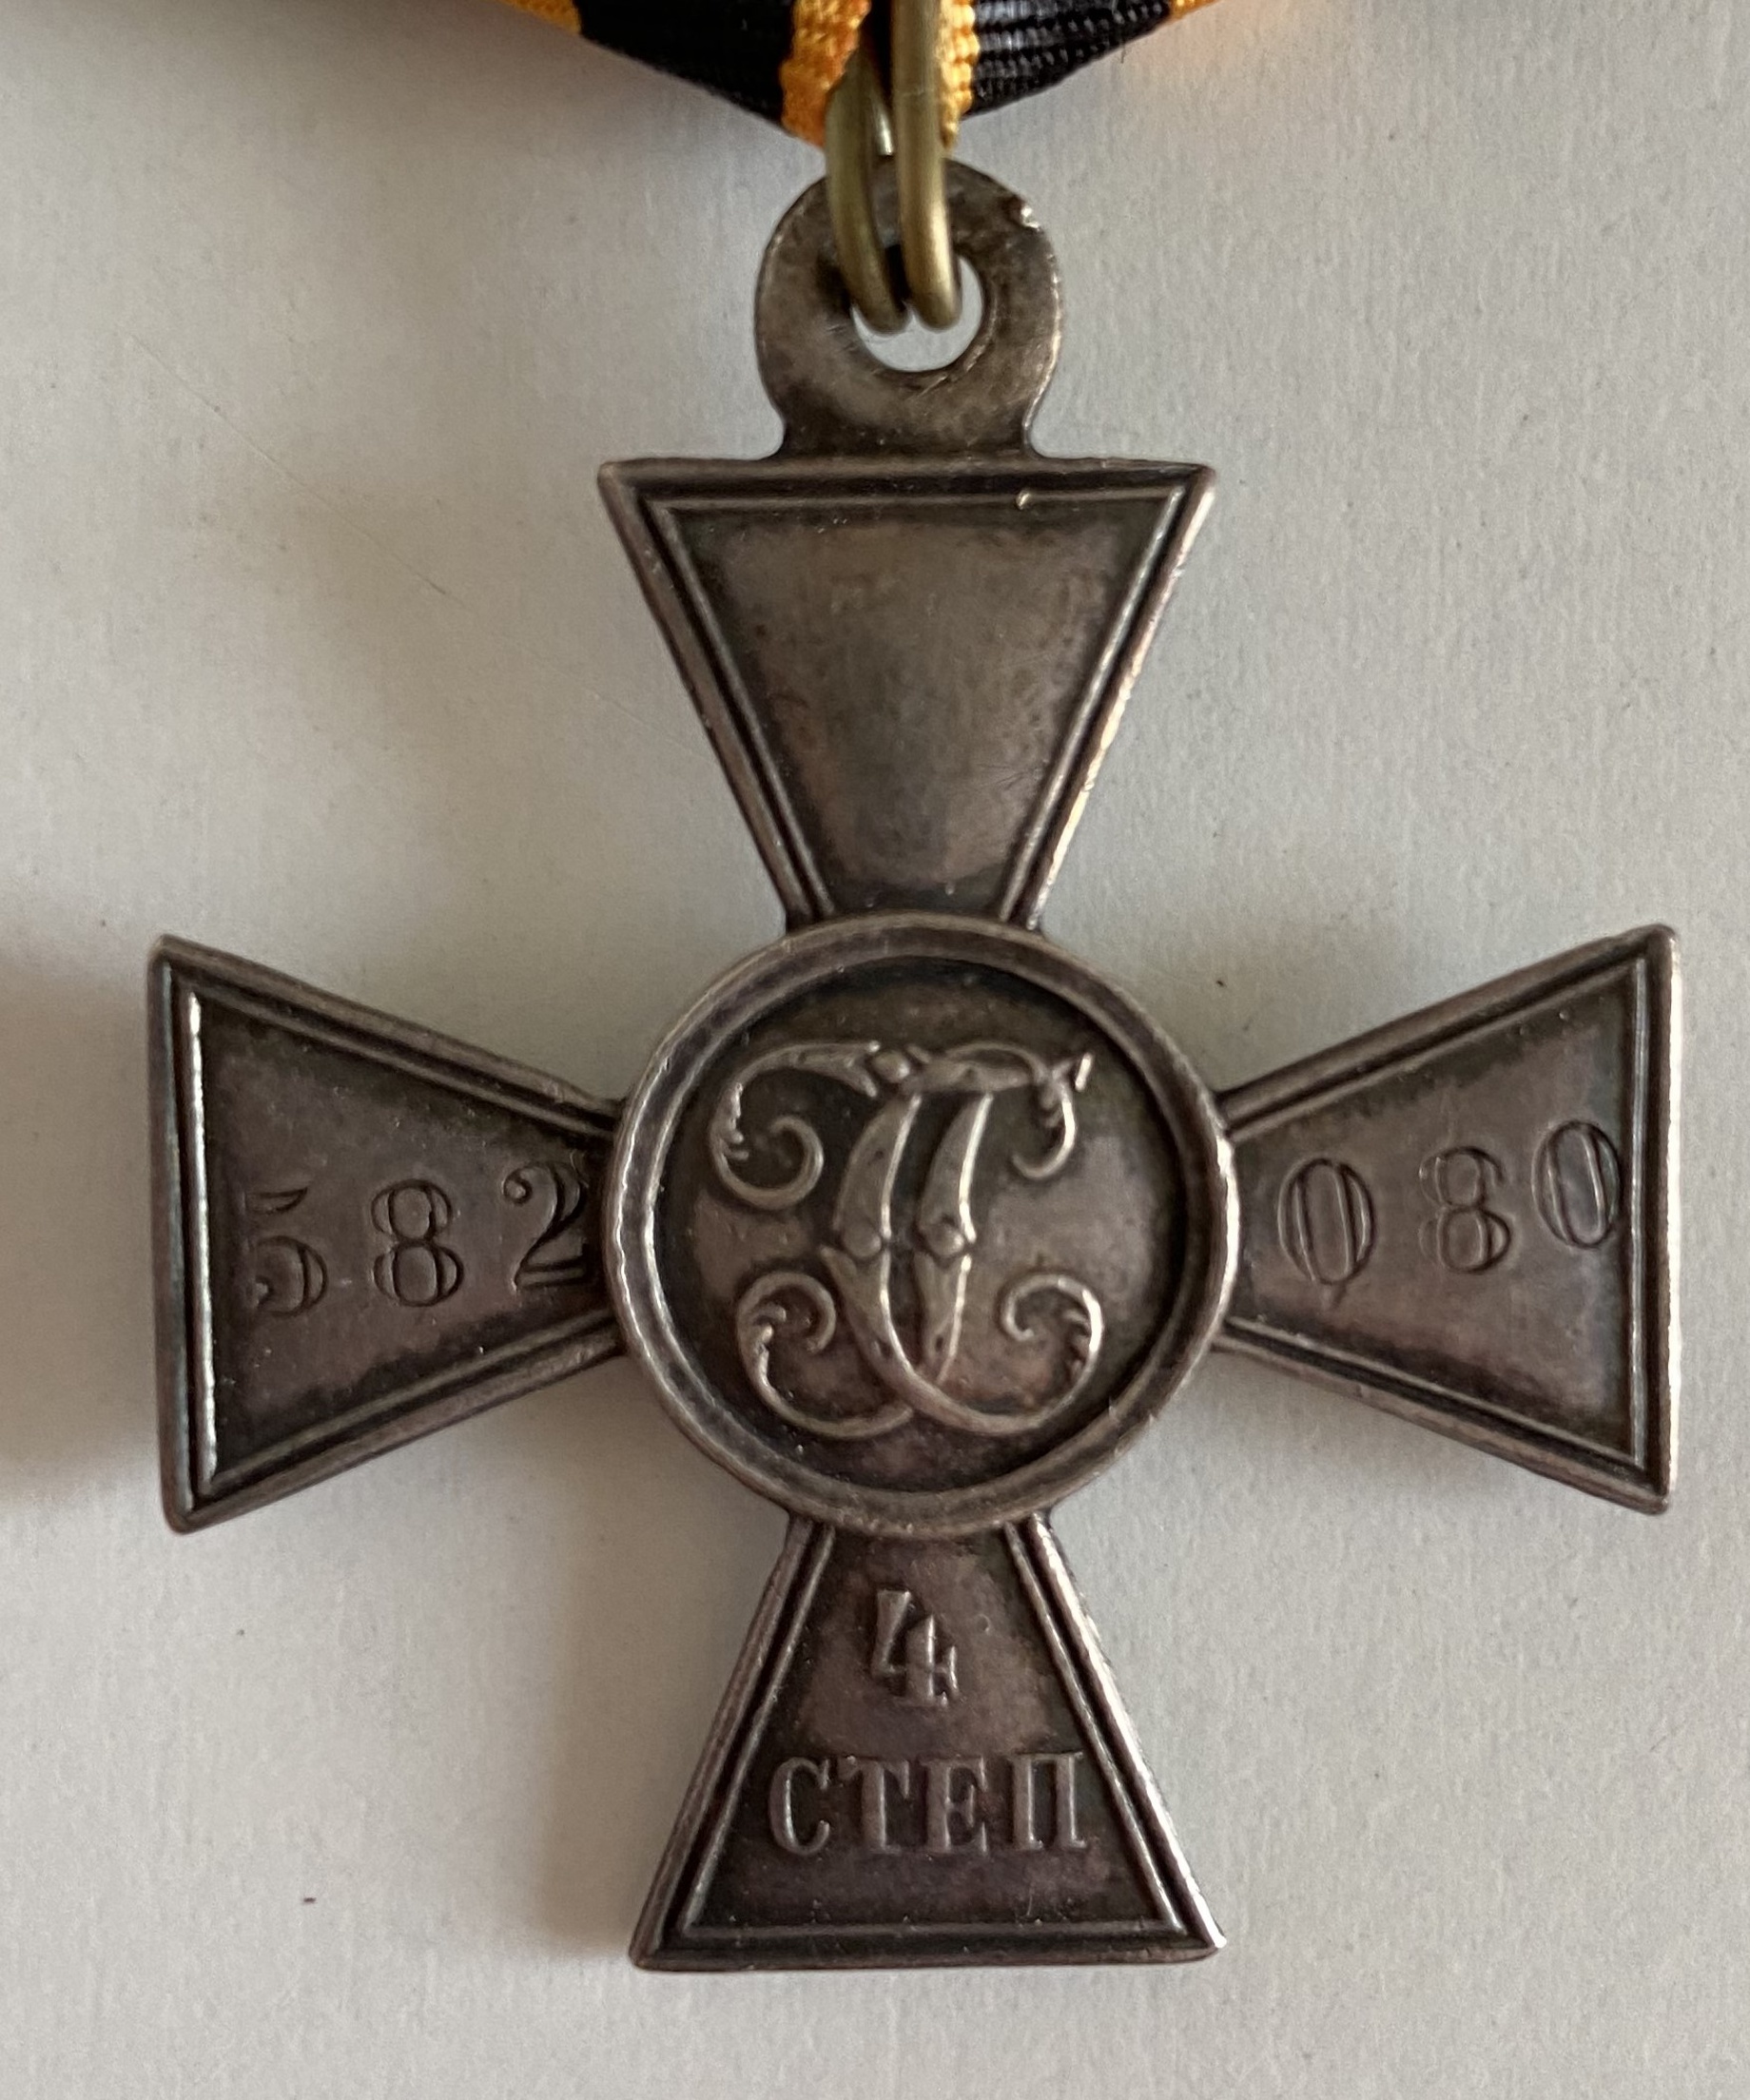 Георгиевский крест 4 степени серебро оригинал - колодка лента копии № 582080